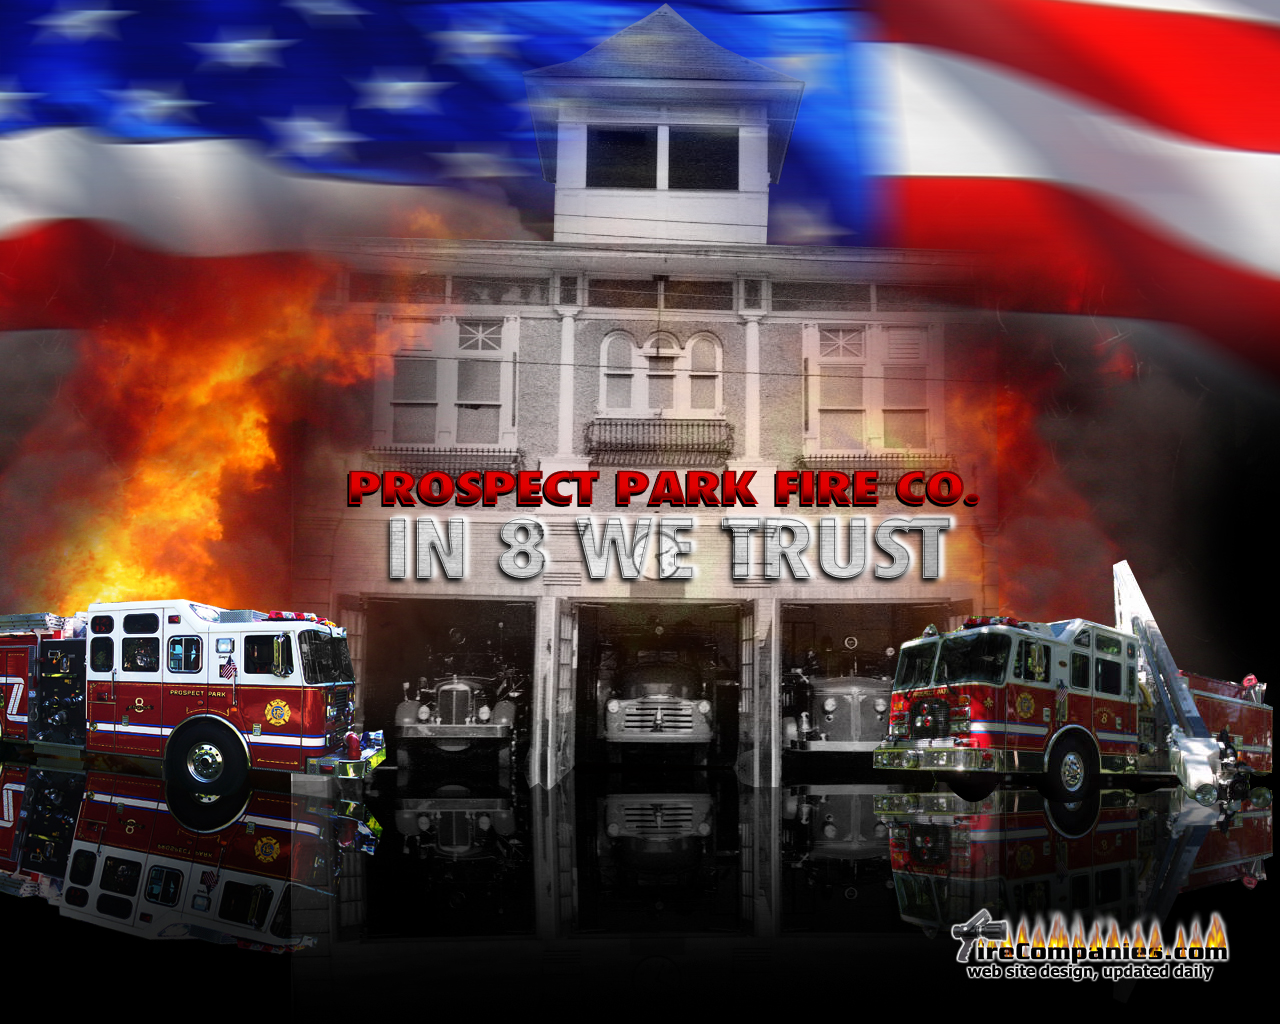 Wele To Prospect Park Fire Co